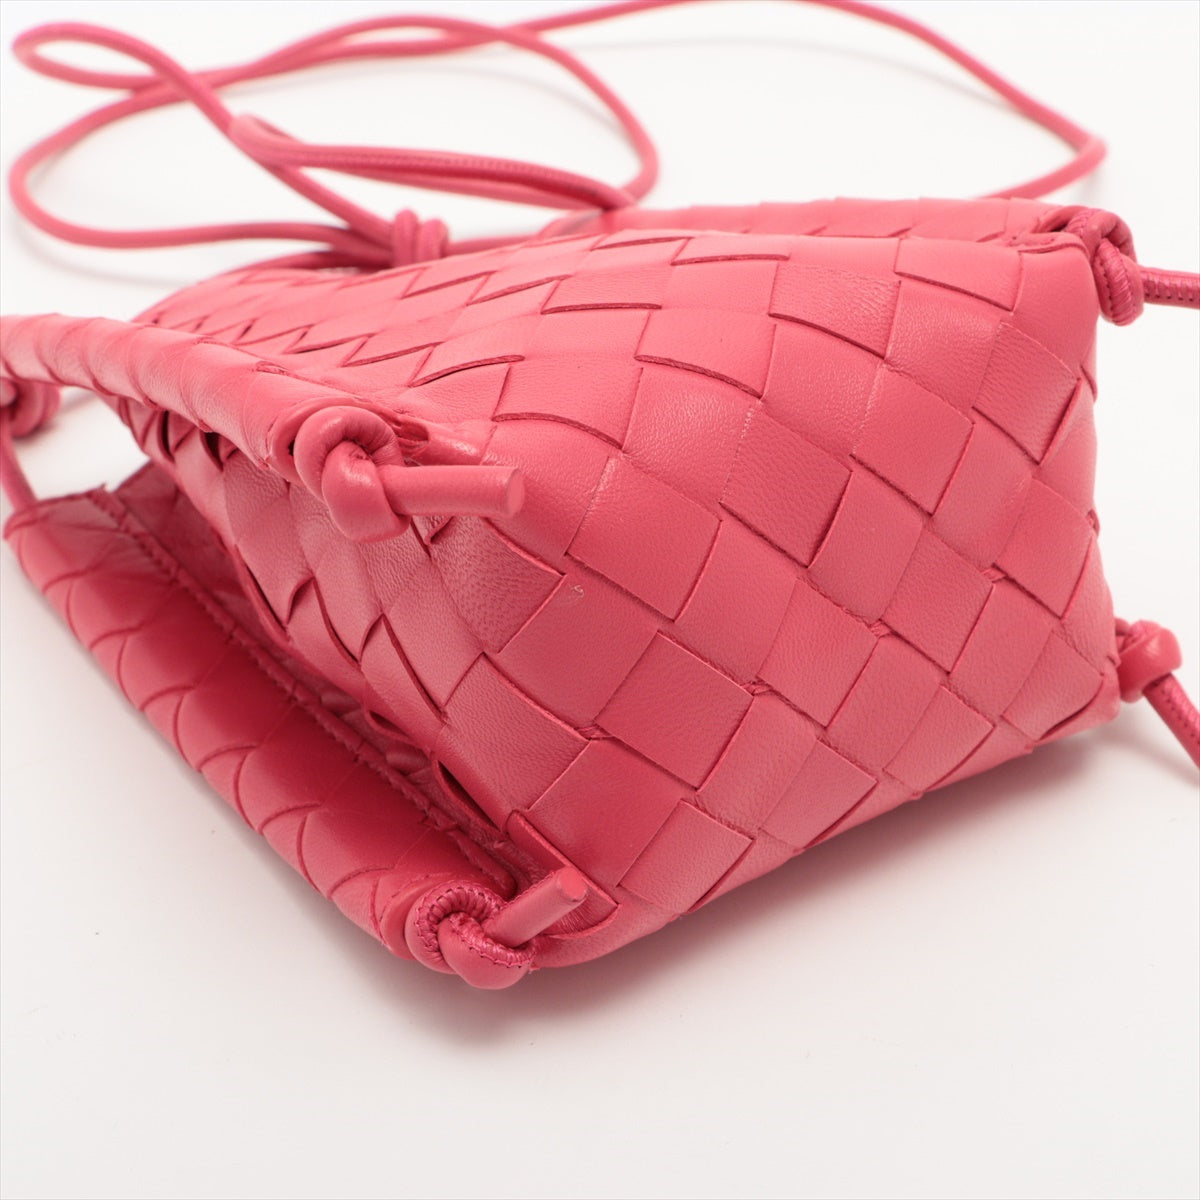 Bottega Veneta Intrecciato Leather Shoulder bag Pink